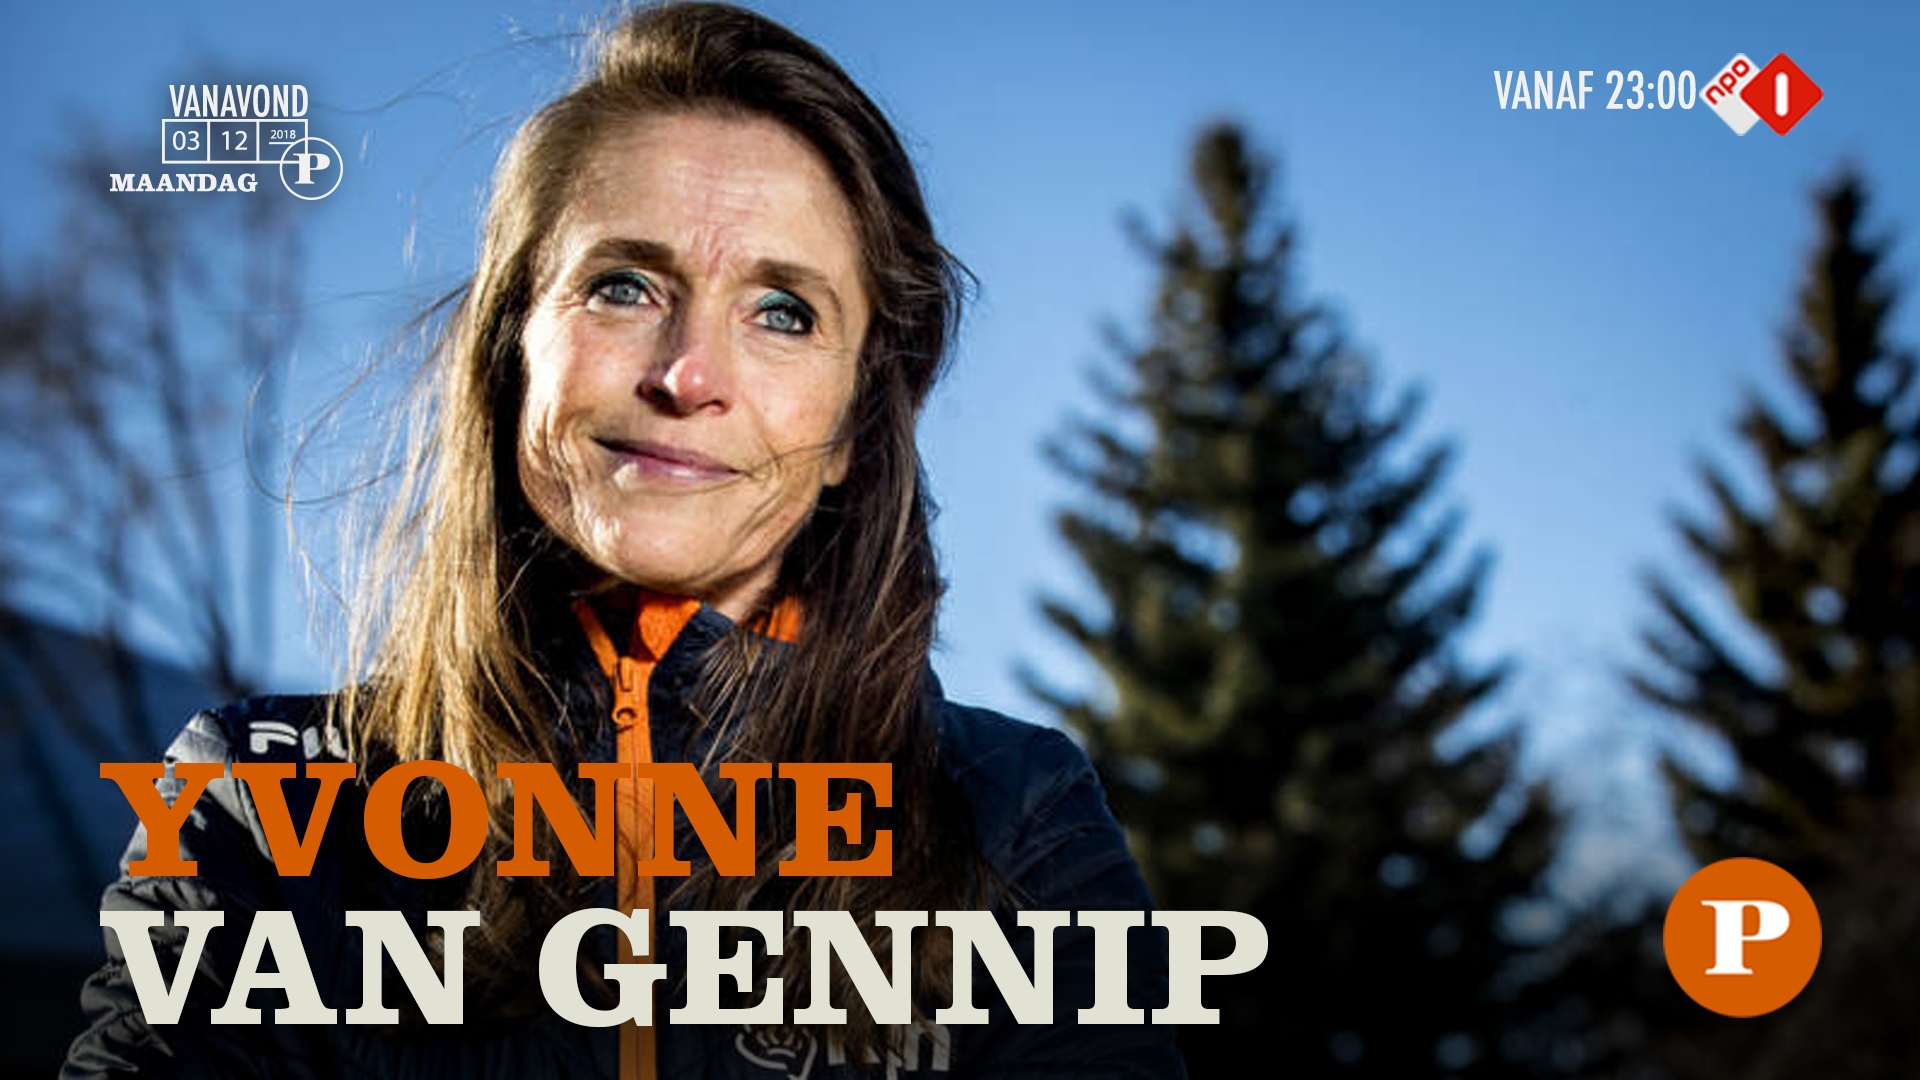 Yvonne van Gennip